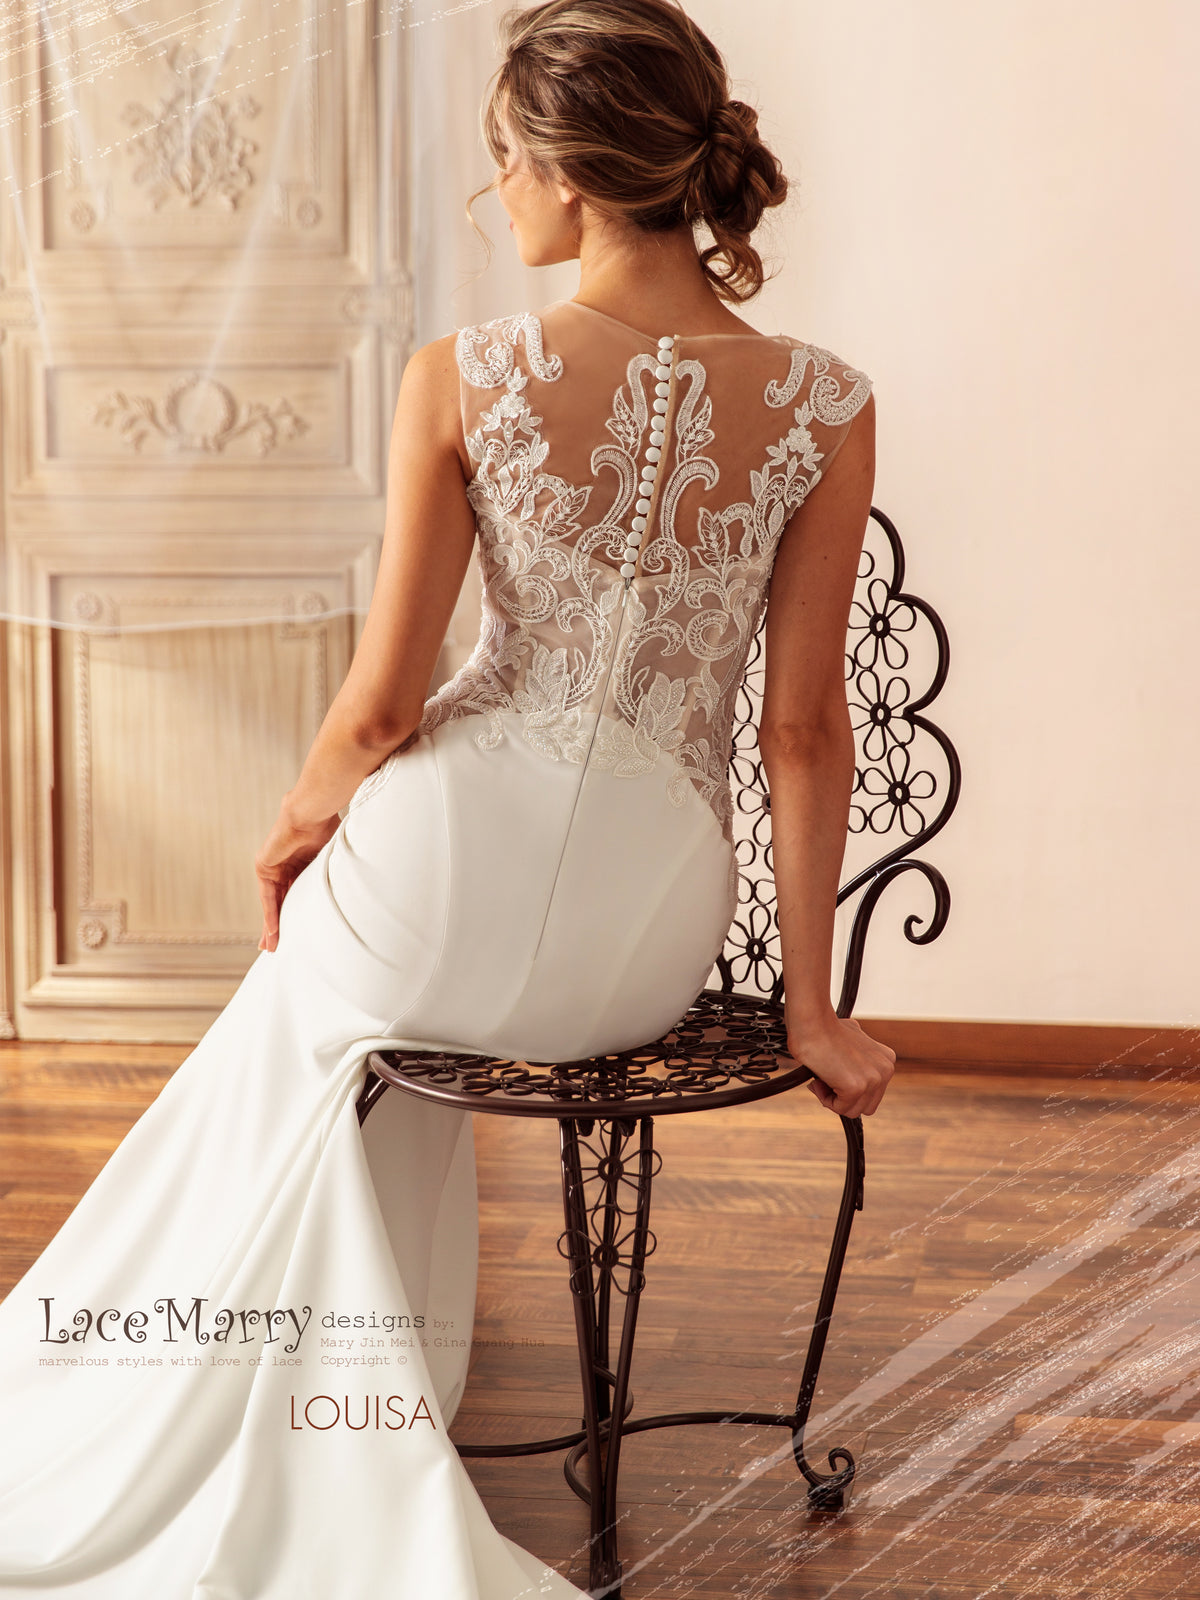 LOUISA / Plain Skirt Wedding Dress with Beaded Lacy Bodice